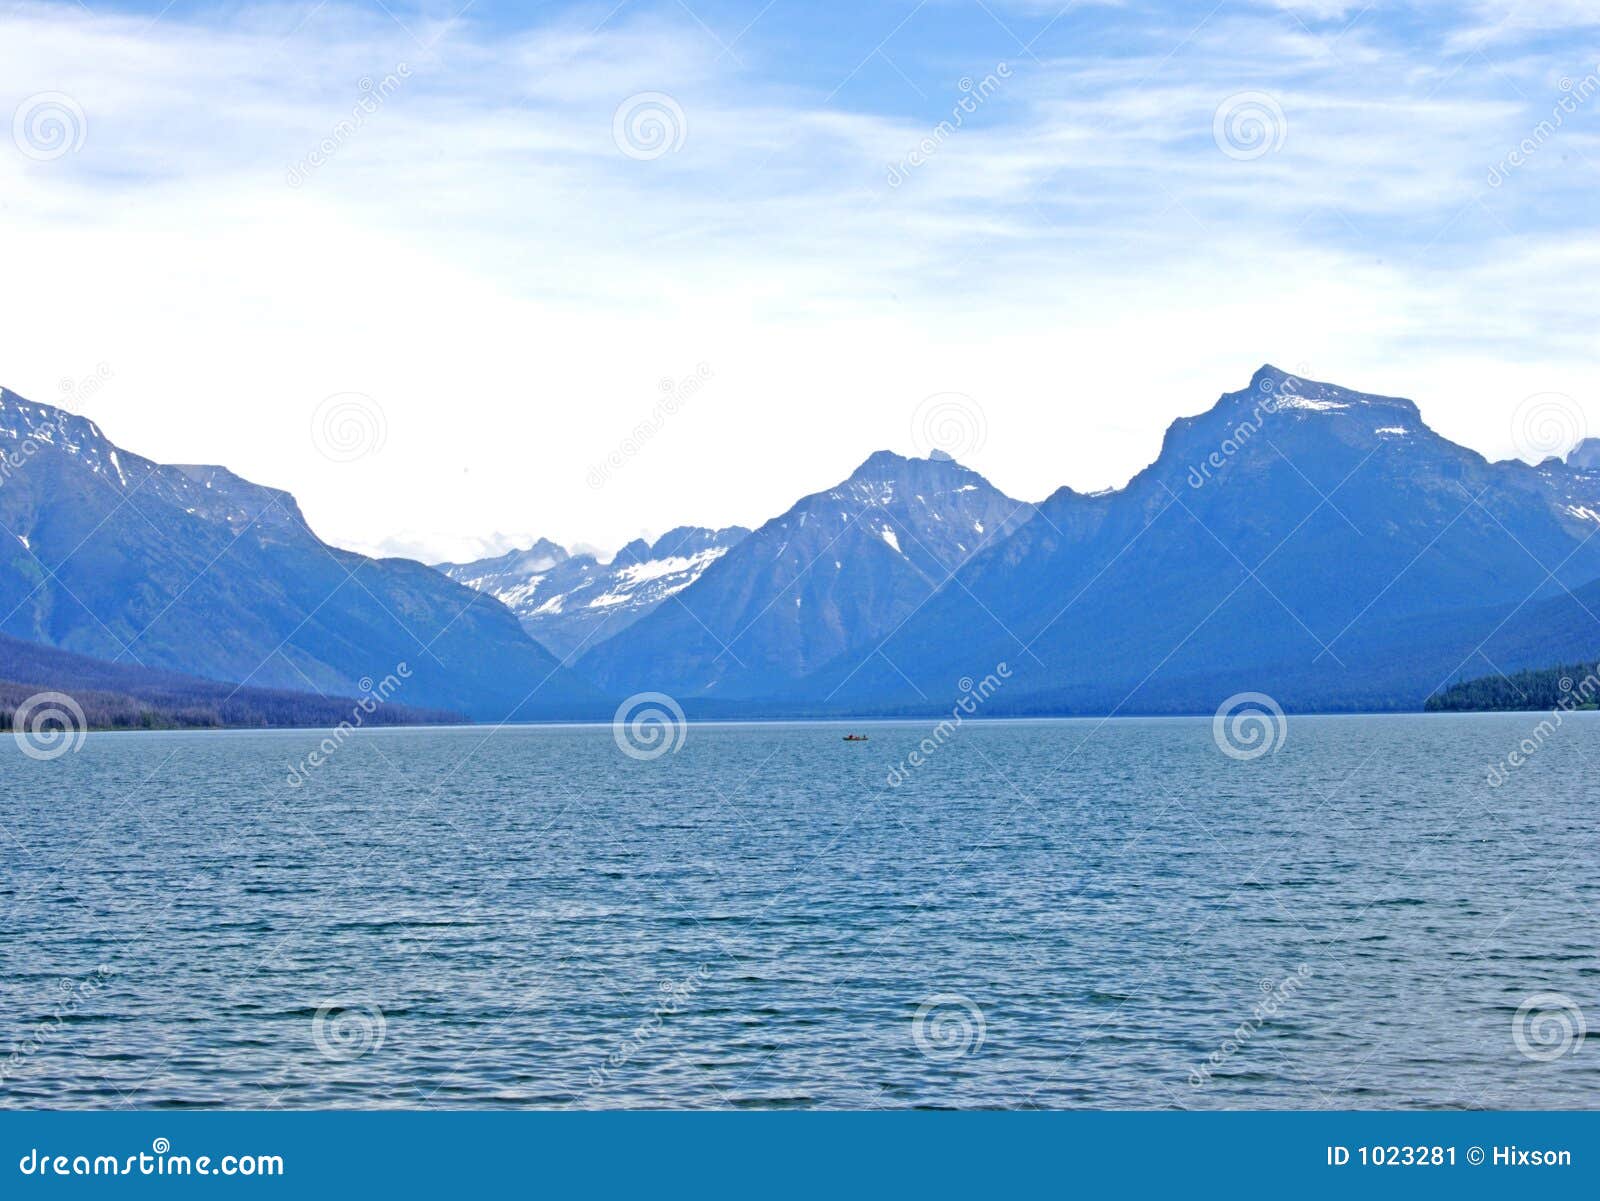 lake mcdonald, glacier park, montana